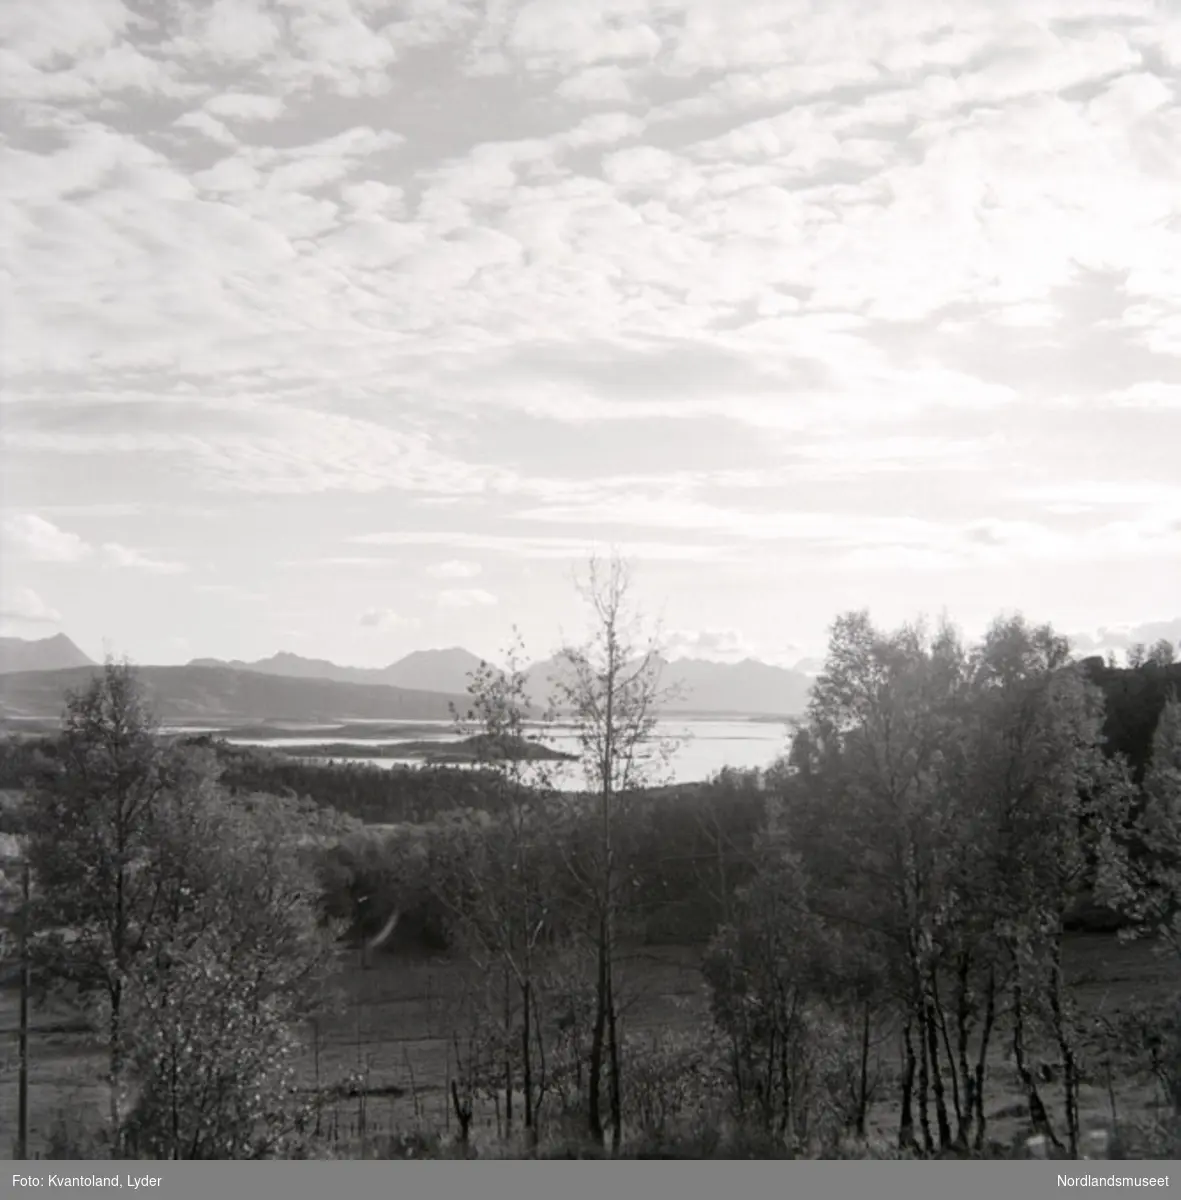 Kvantolands protokoll: 1. pl. fra Drag i Tysfjord, resten fra Hamarøy